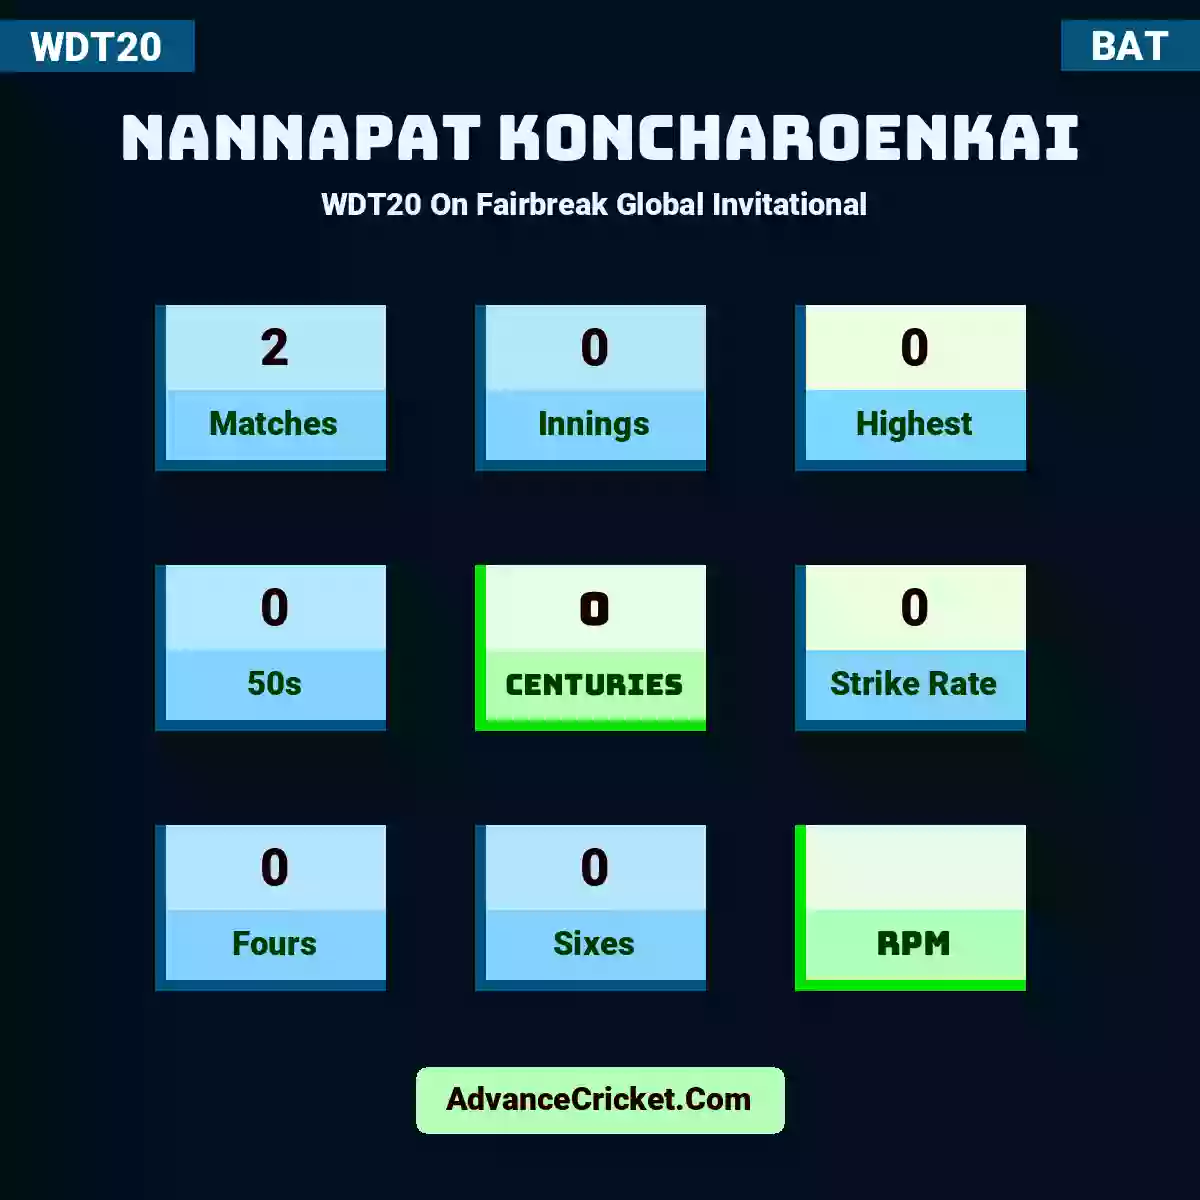 Nannapat Koncharoenkai WDT20  On Fairbreak Global Invitational , Nannapat Koncharoenkai played 2 matches, scored 0 runs as highest, 0 half-centuries, and 0 centuries, with a strike rate of 0. N.Koncharoenkai hit 0 fours and 0 sixes.